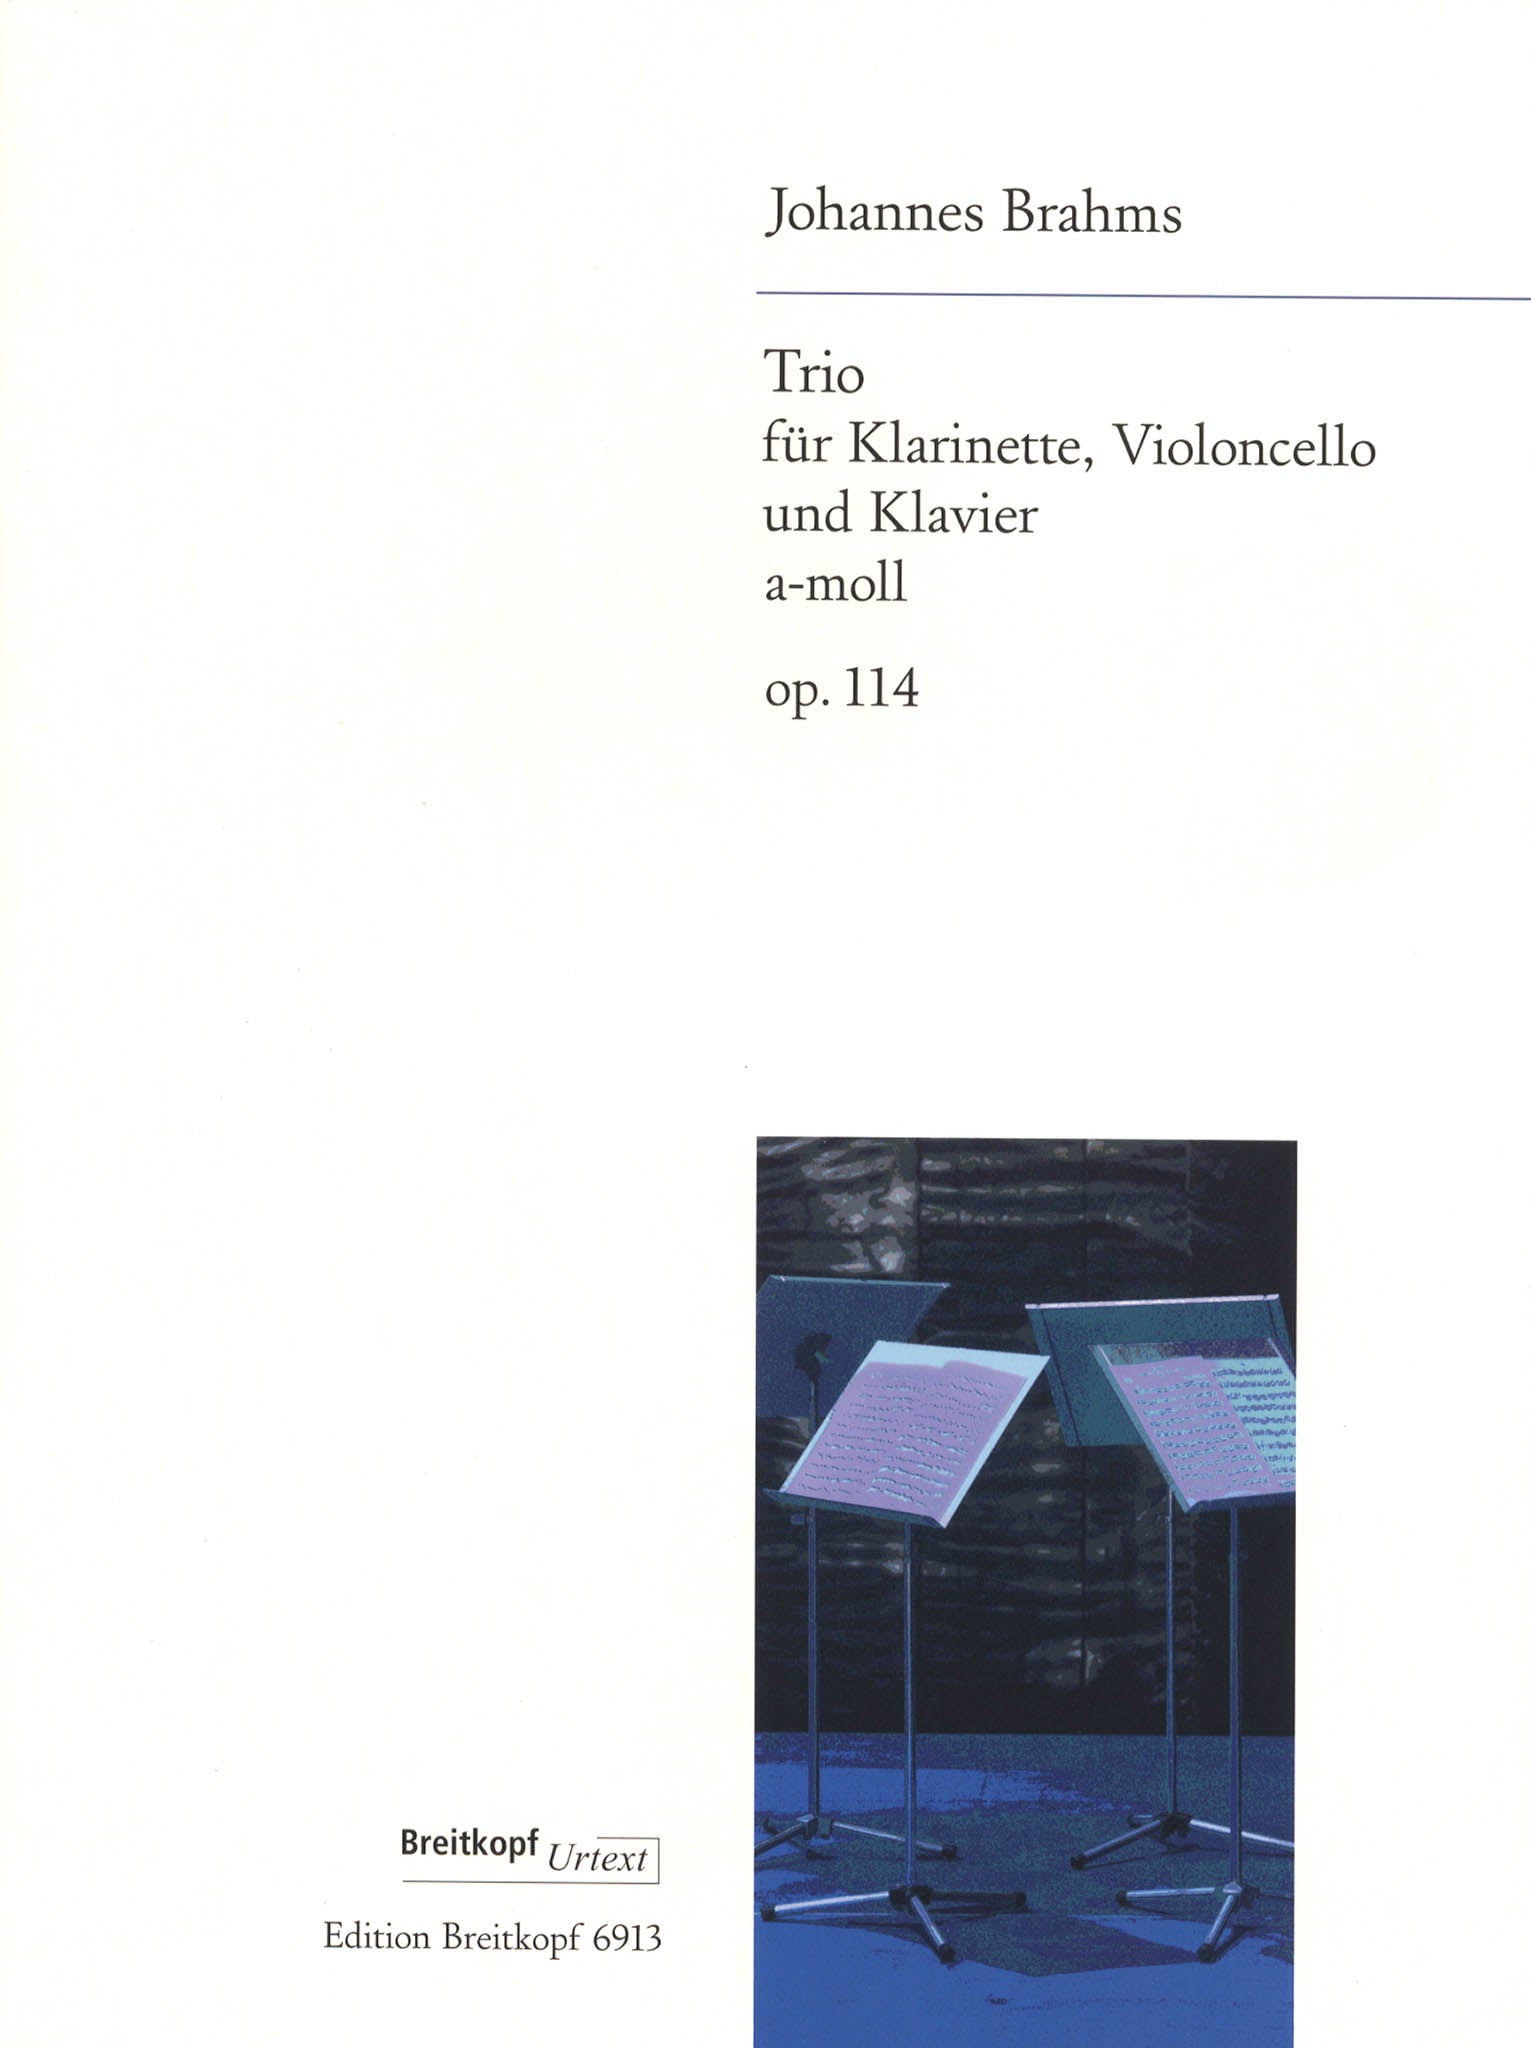 Clarinet Trio in A Minor, Op. 114 Cover